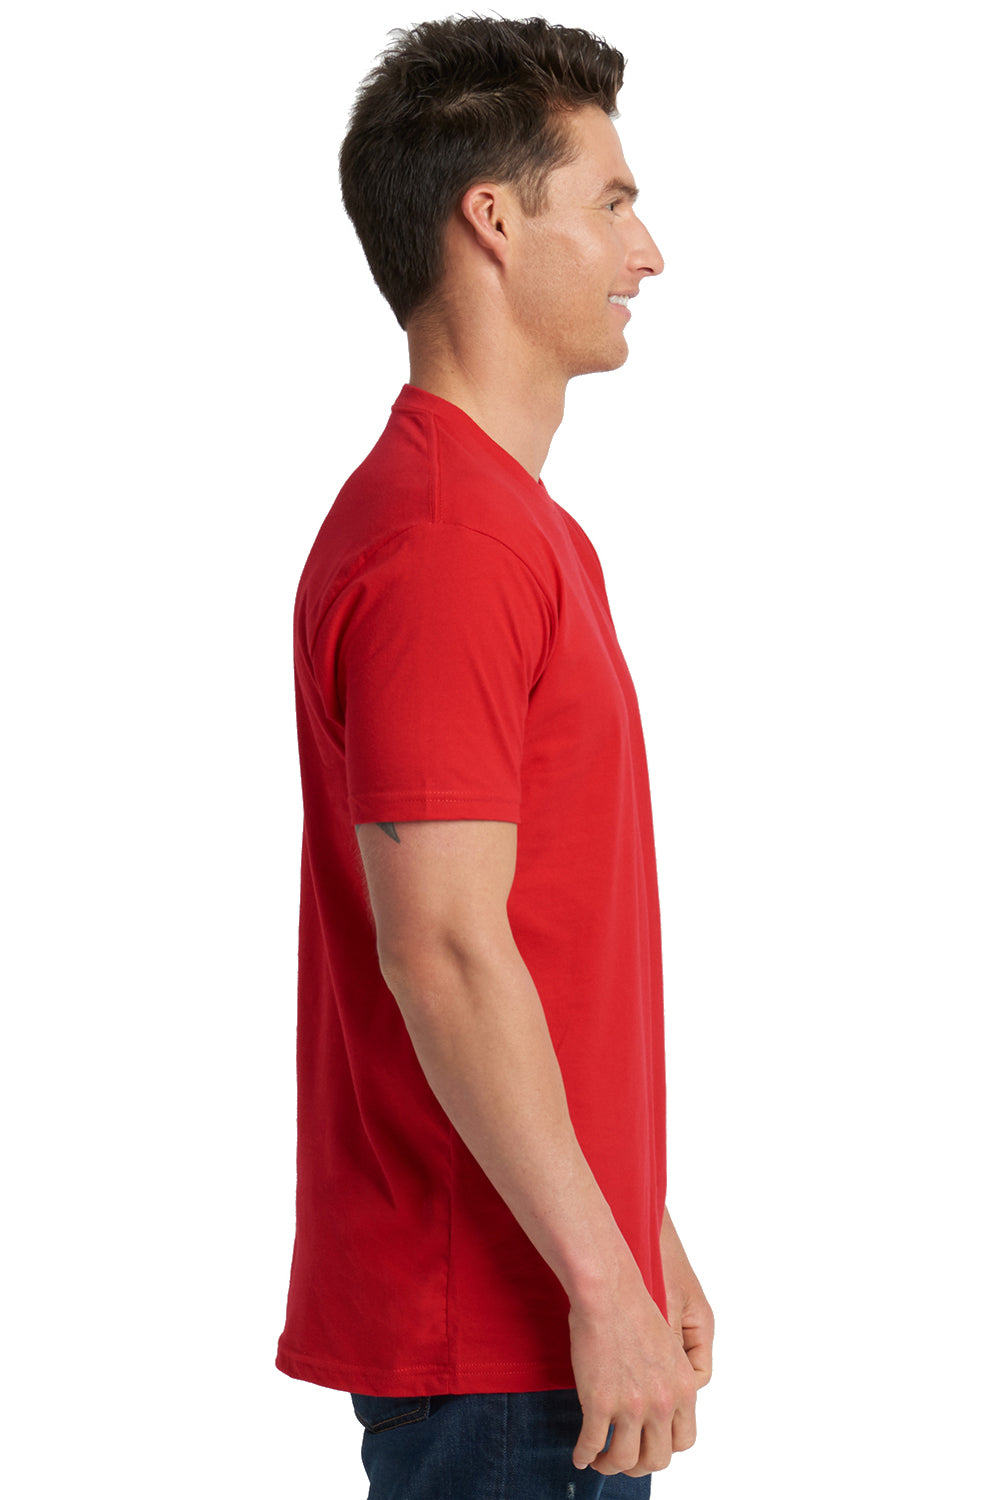 Next Level 3600 Mens Fine Jersey Short Sleeve Crewneck T-Shirt Red Side